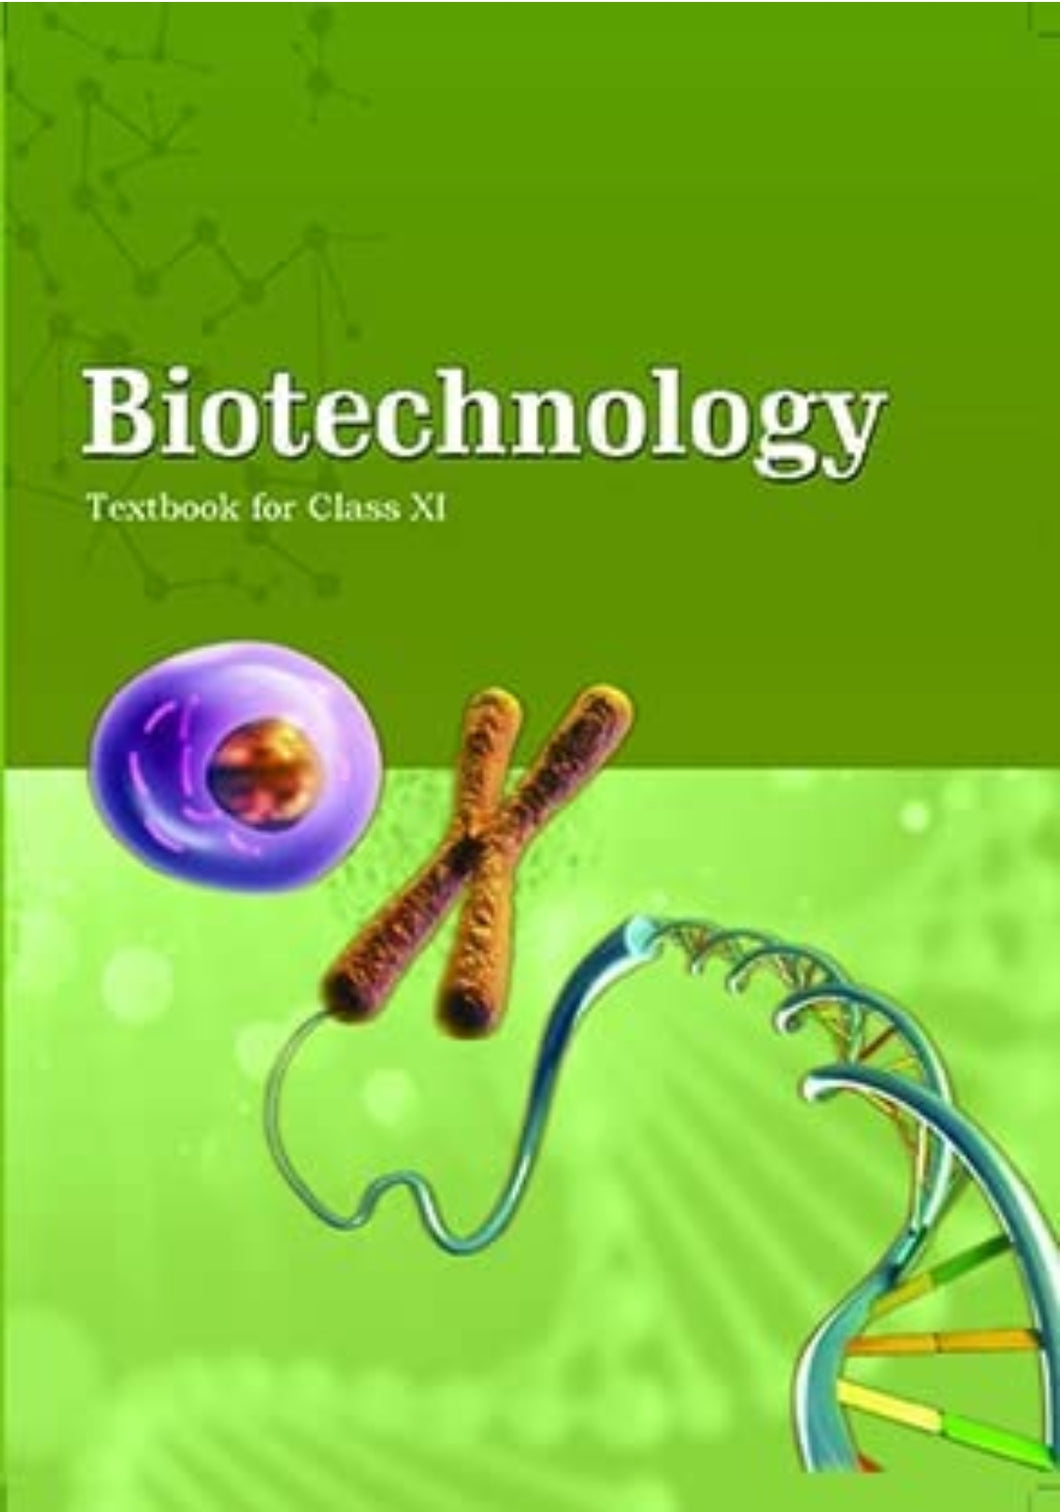 NCERT Biotechnology for Class 11 - latest edition as per NCERT/CBSE